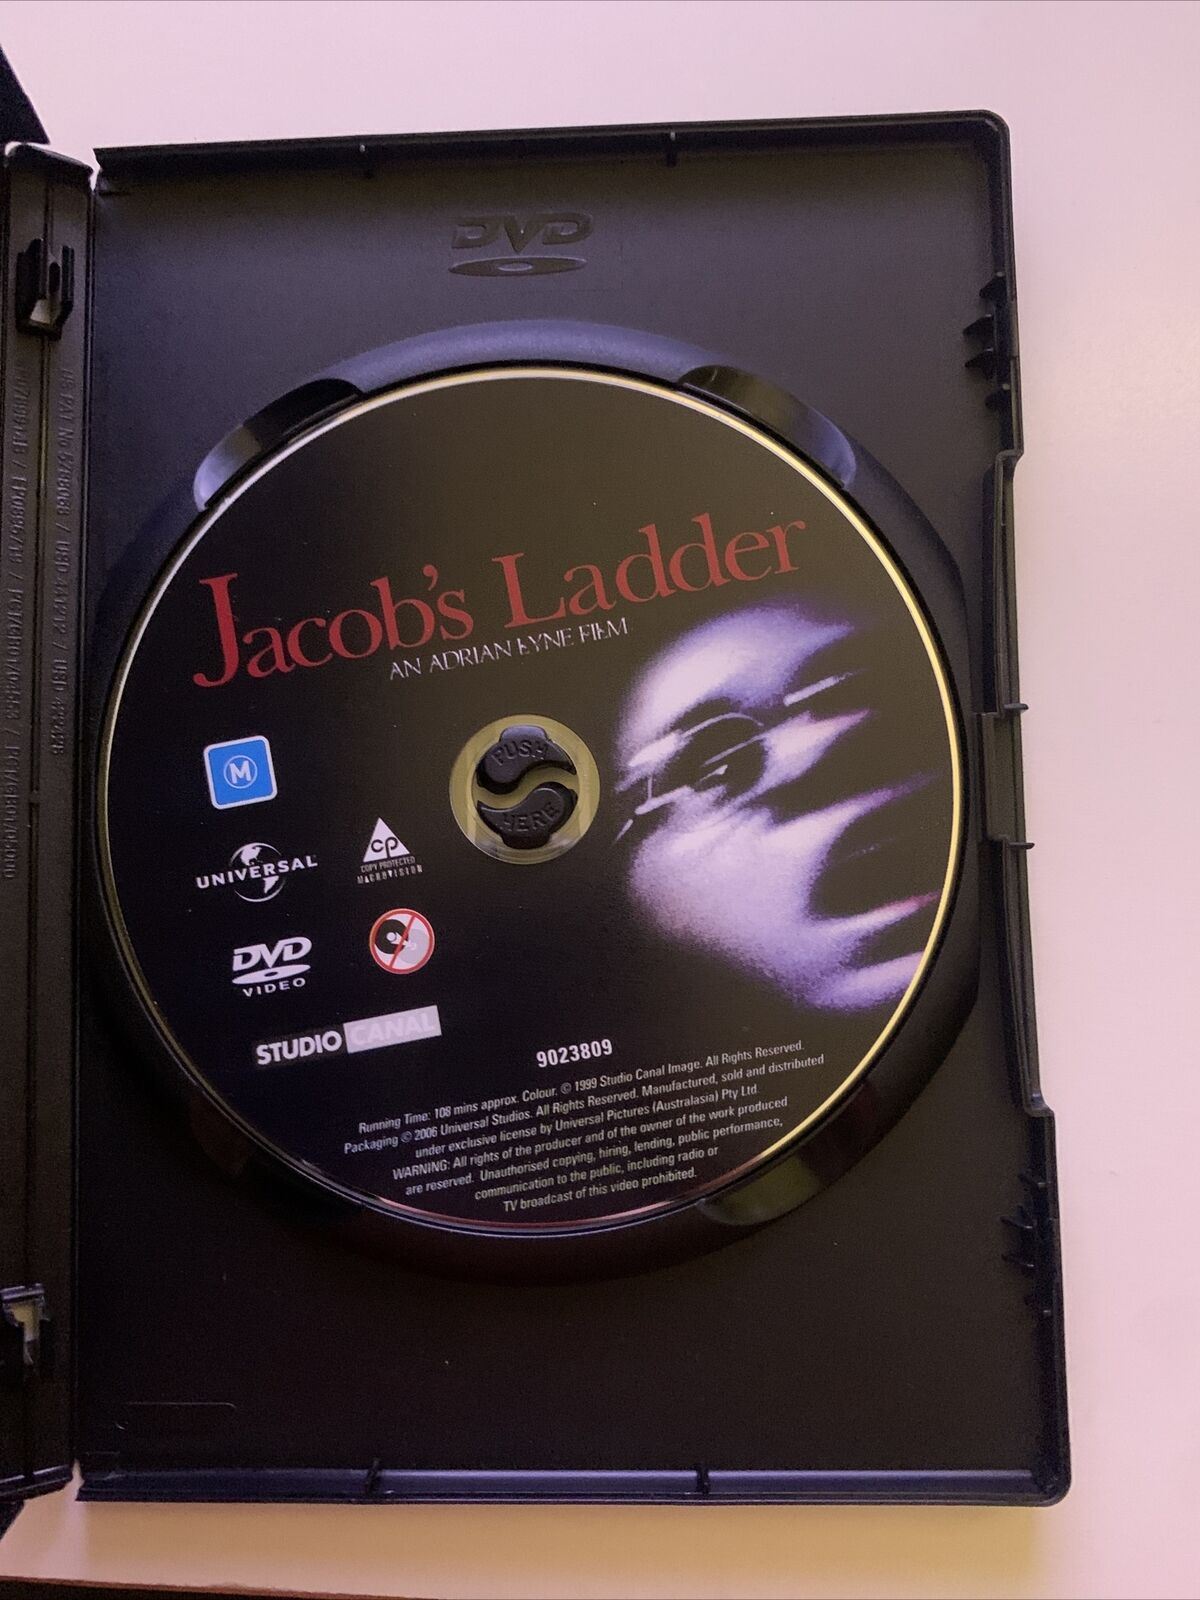 Jacob's Ladder (DVD, 1990) Tim Robbins, Elizabeth Peña, Danny Aiello. Region 4